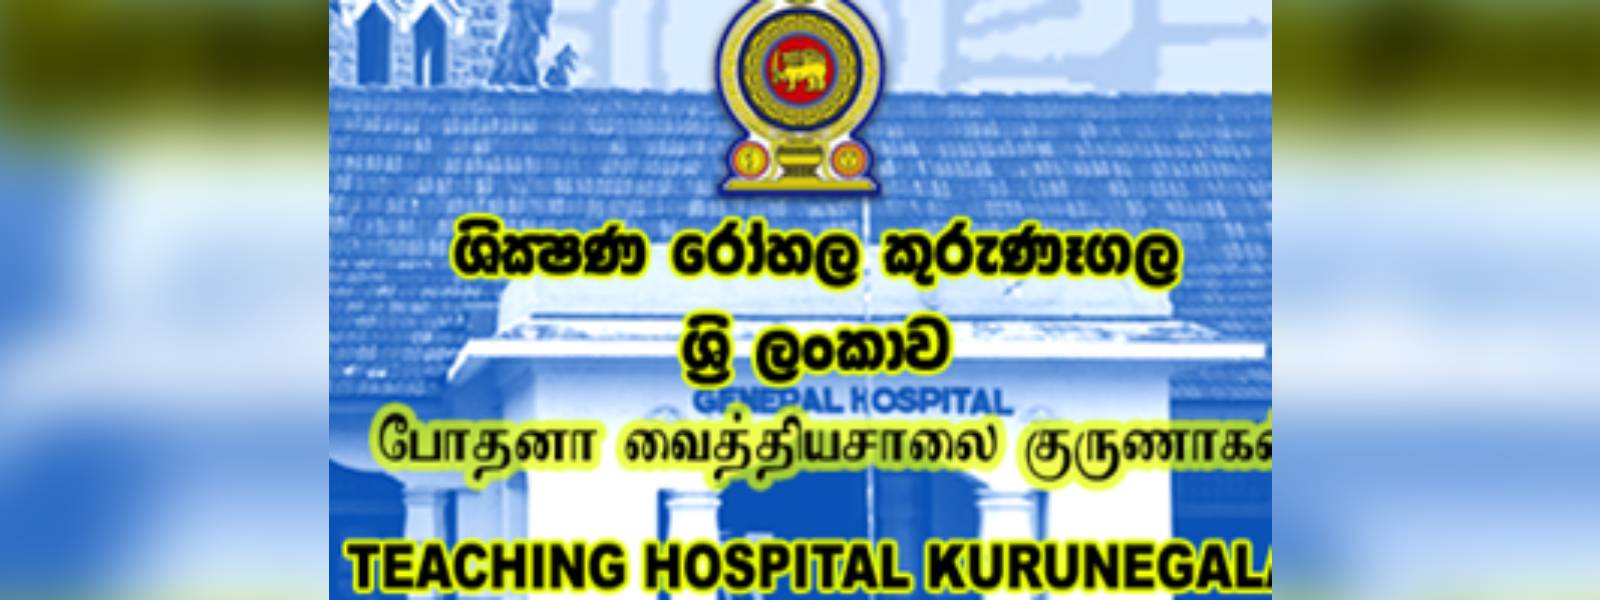 Kurunegala Hospital reverses move to close its emergency ward